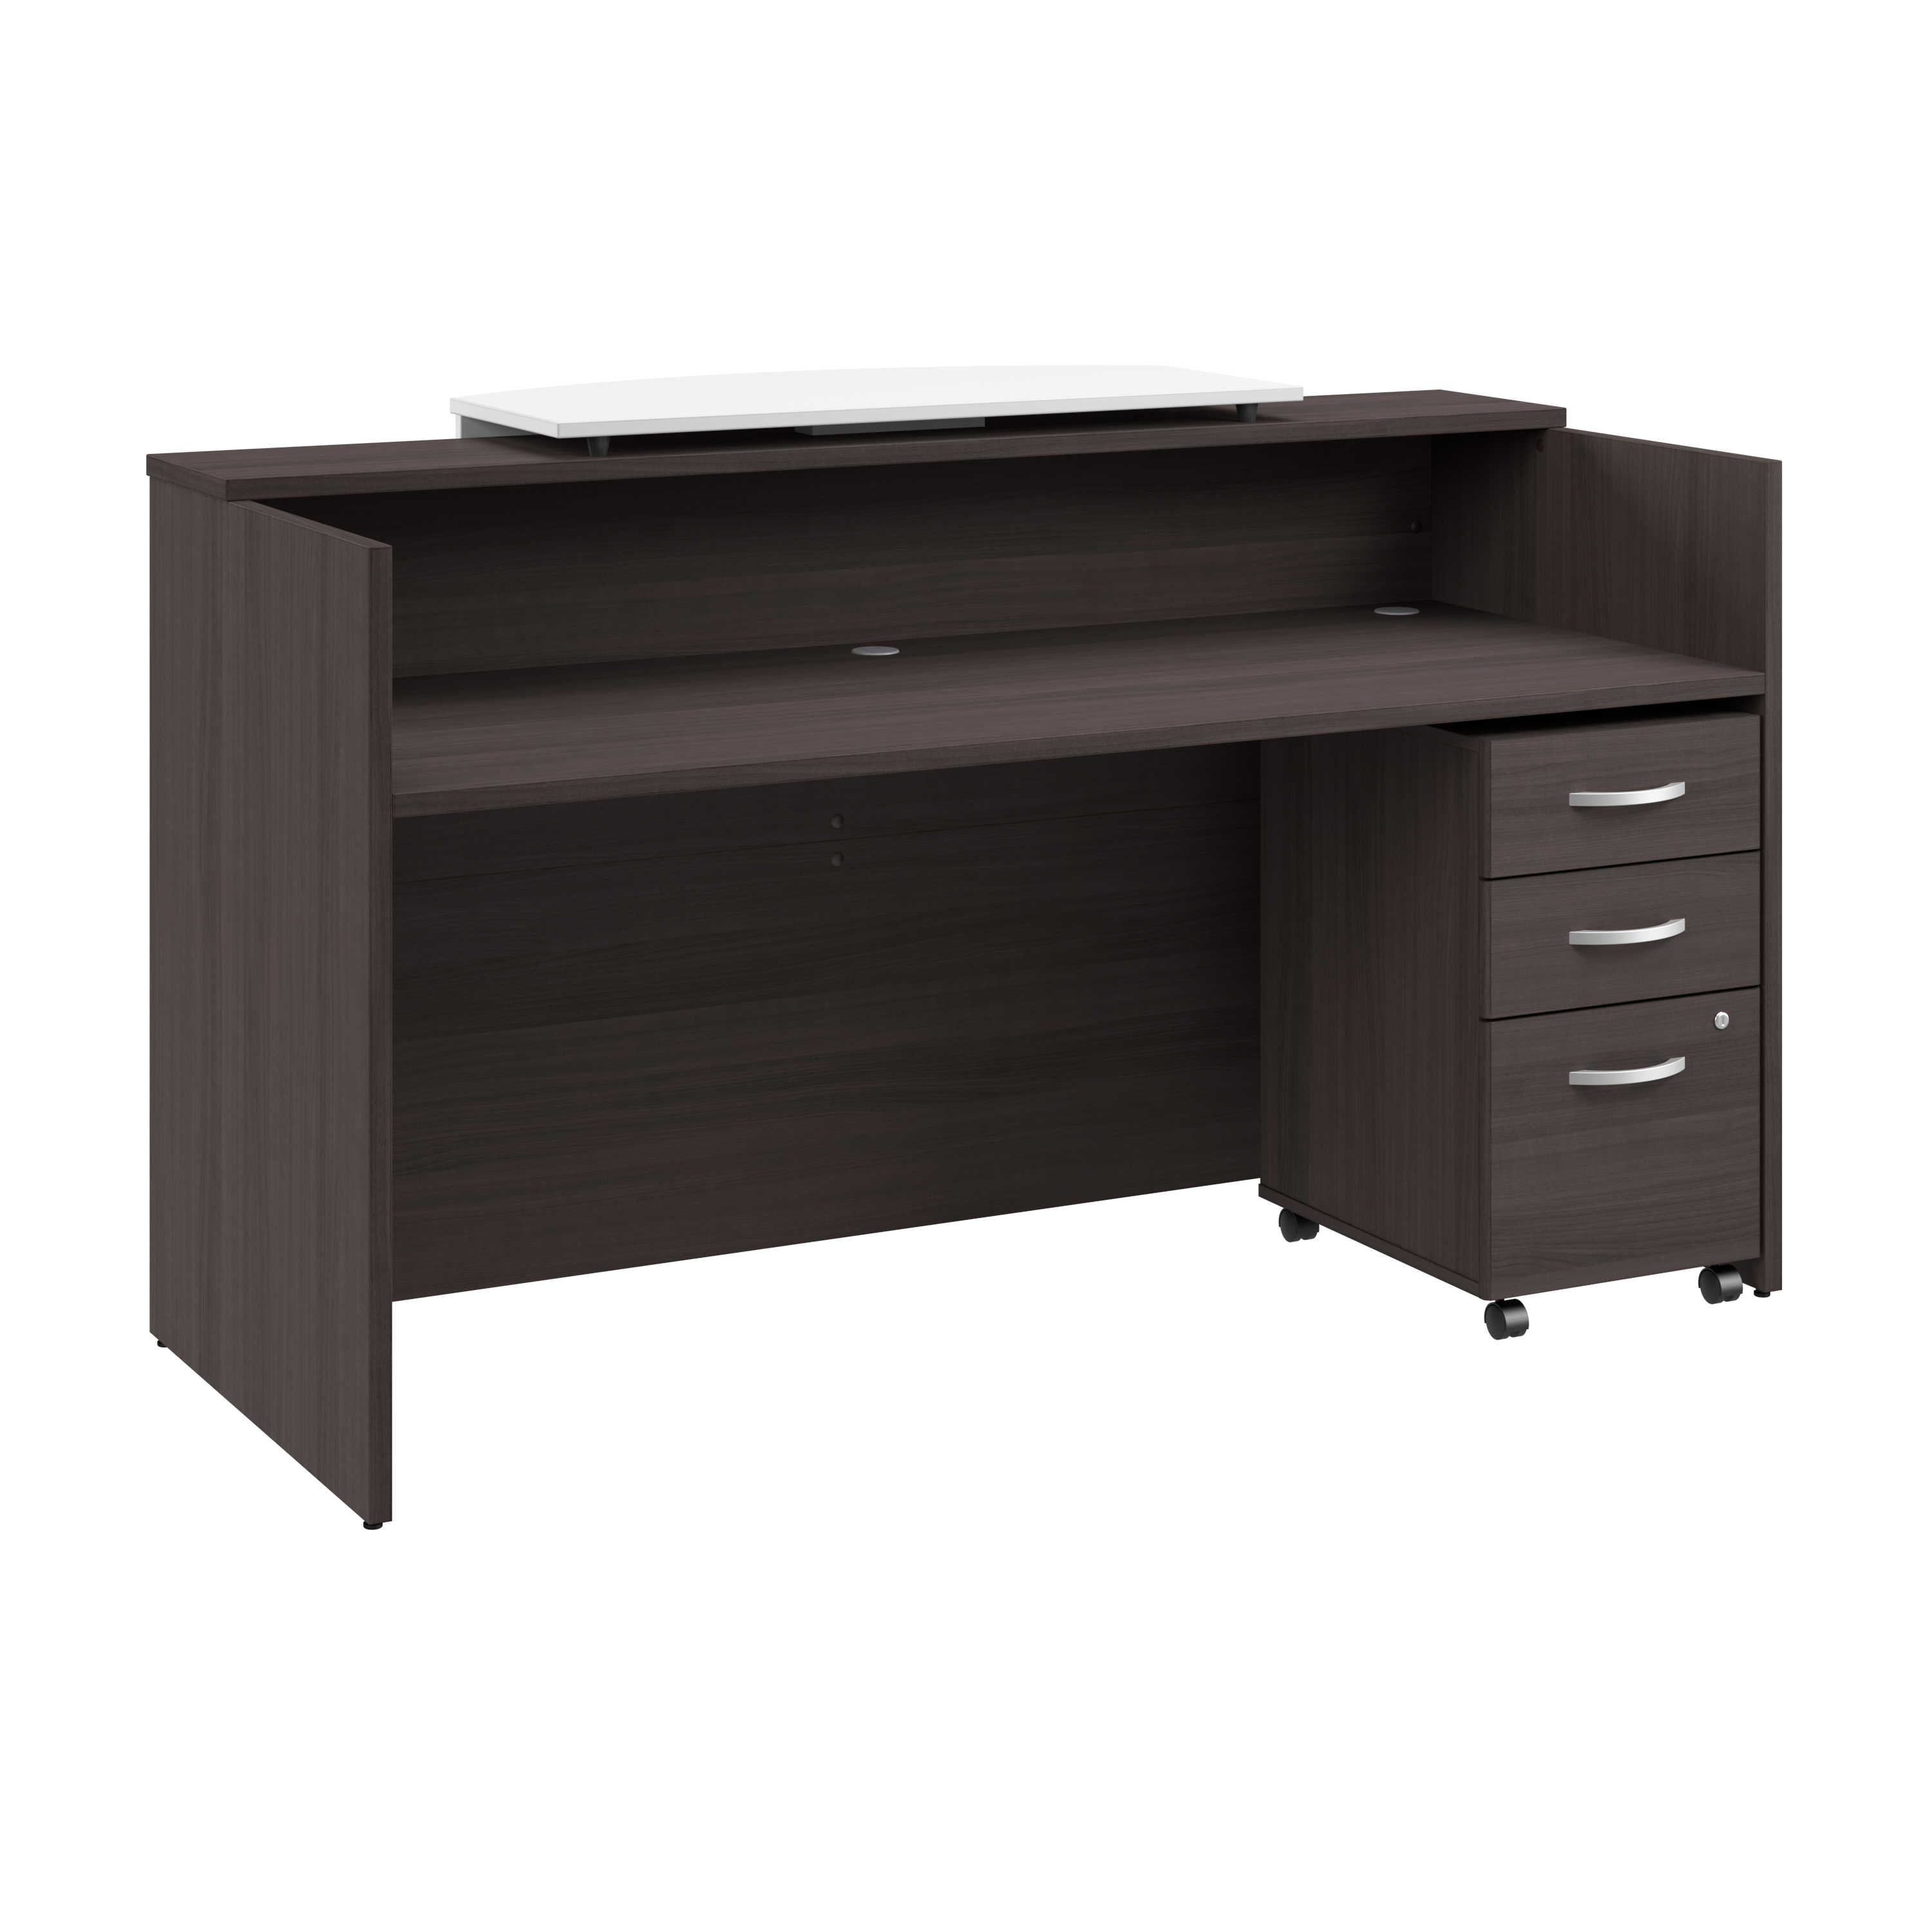 Shop Bush Business Furniture Arrive 72W x 30D Reception Desk with Counter and Mobile File Cabinet 02 ARV008SG #color_storm gray